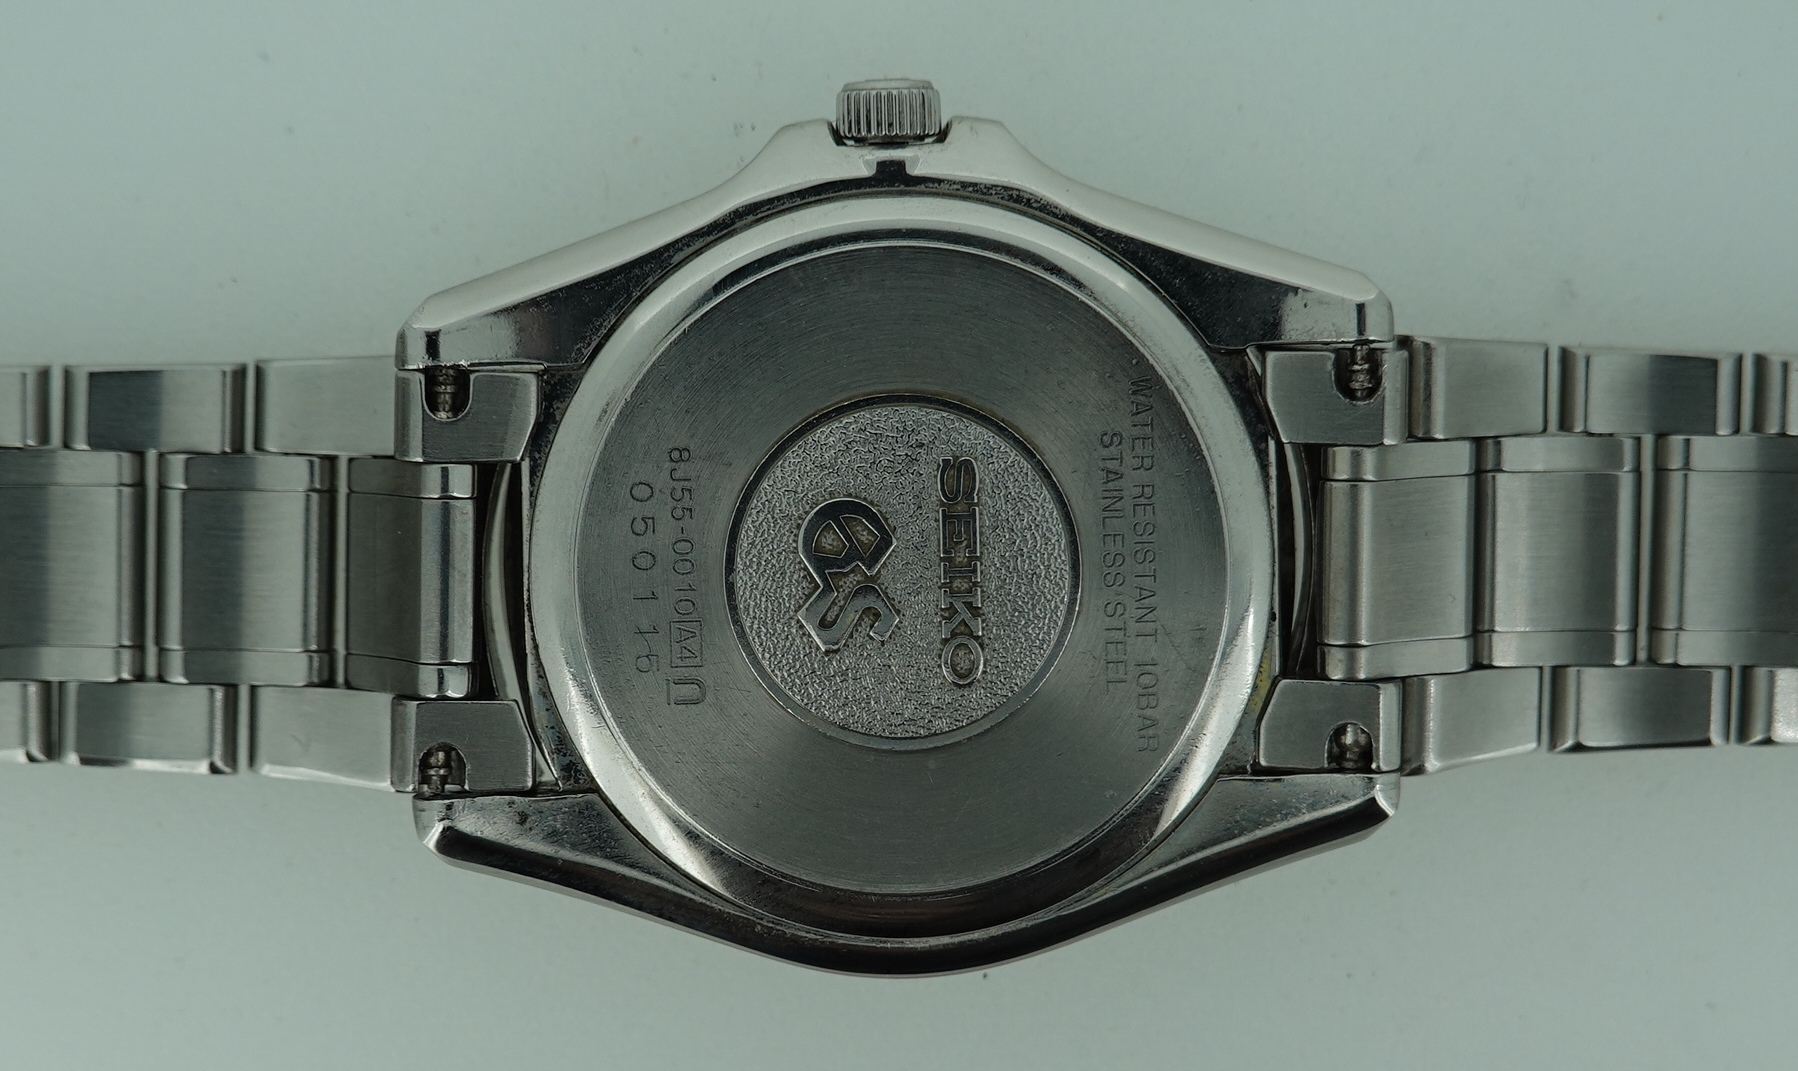 SOLD 2000 Grand Seiko 8J55-0010 - Birth Year Watches